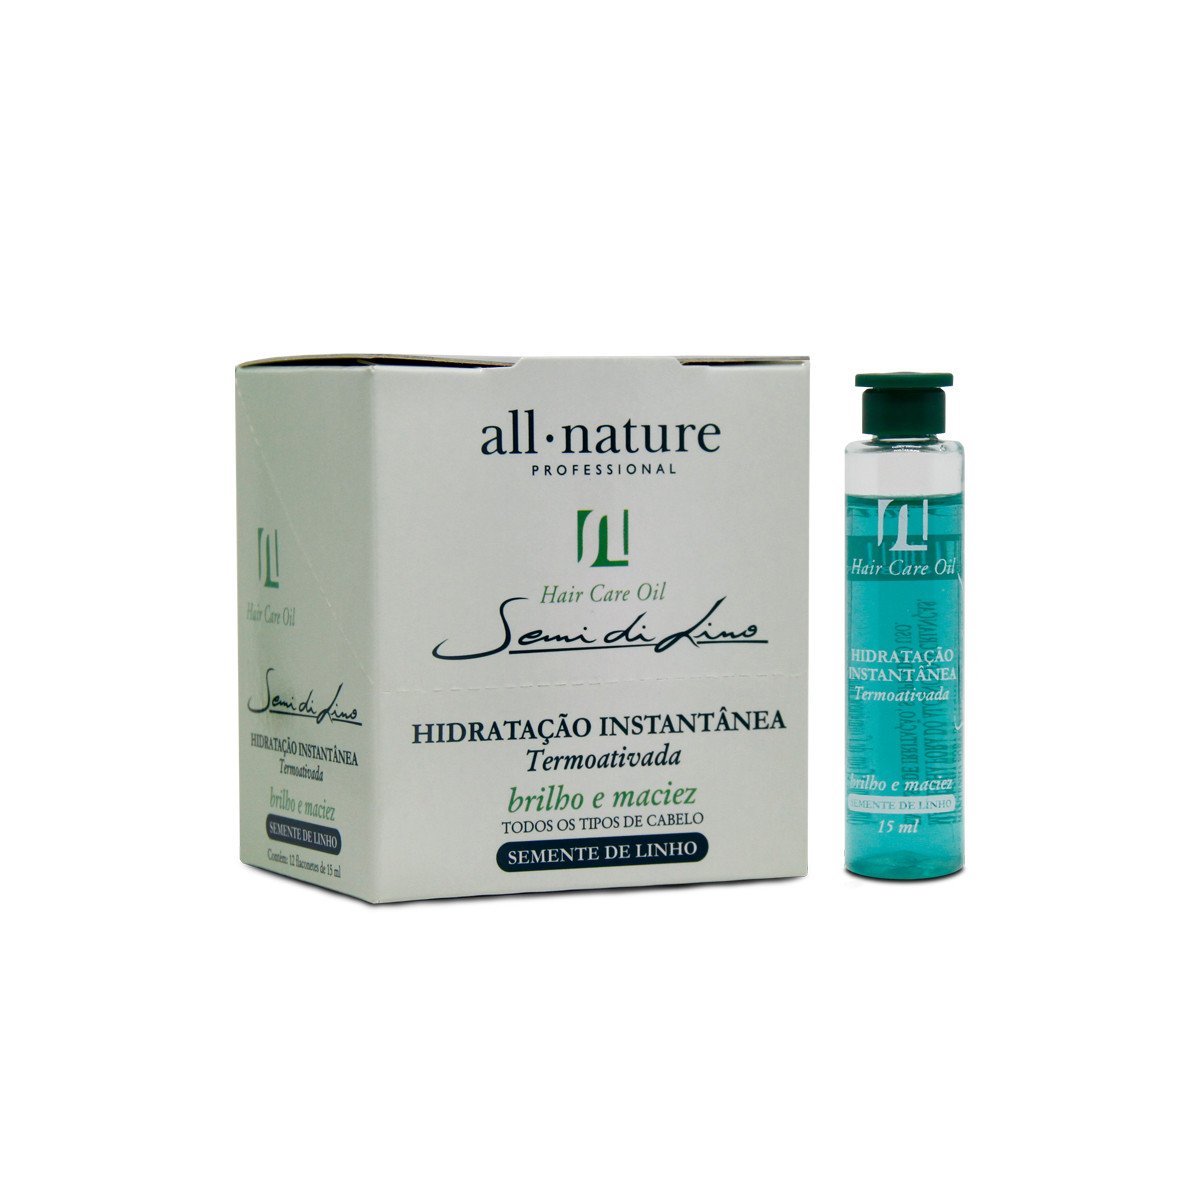 All Nature Home Care Care Oil Semi di Lino Thermo Activated Instant Hydration 12x15ml - All Nature